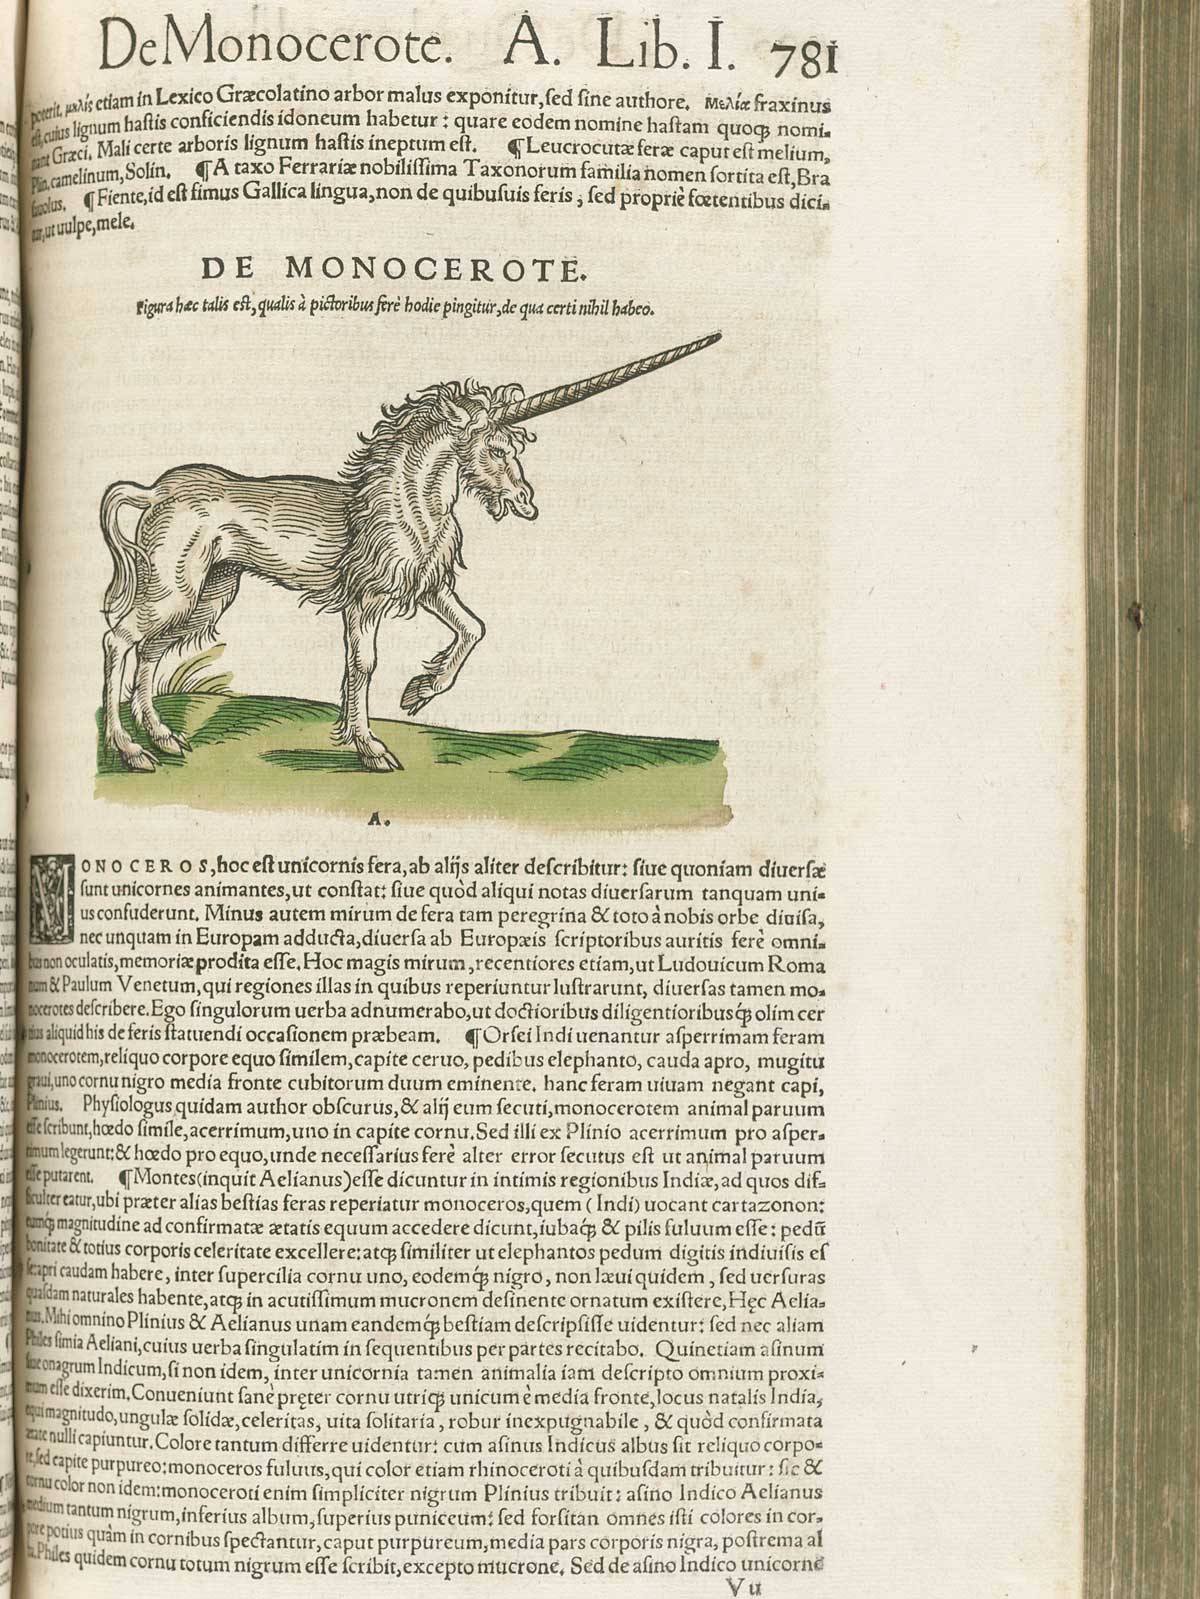 Page 781 from volume 1 of Conrad Gessner's Conradi Gesneri medici Tigurini Historiae animalium, featuring the colored woodcut of de monocerote or unicorn.